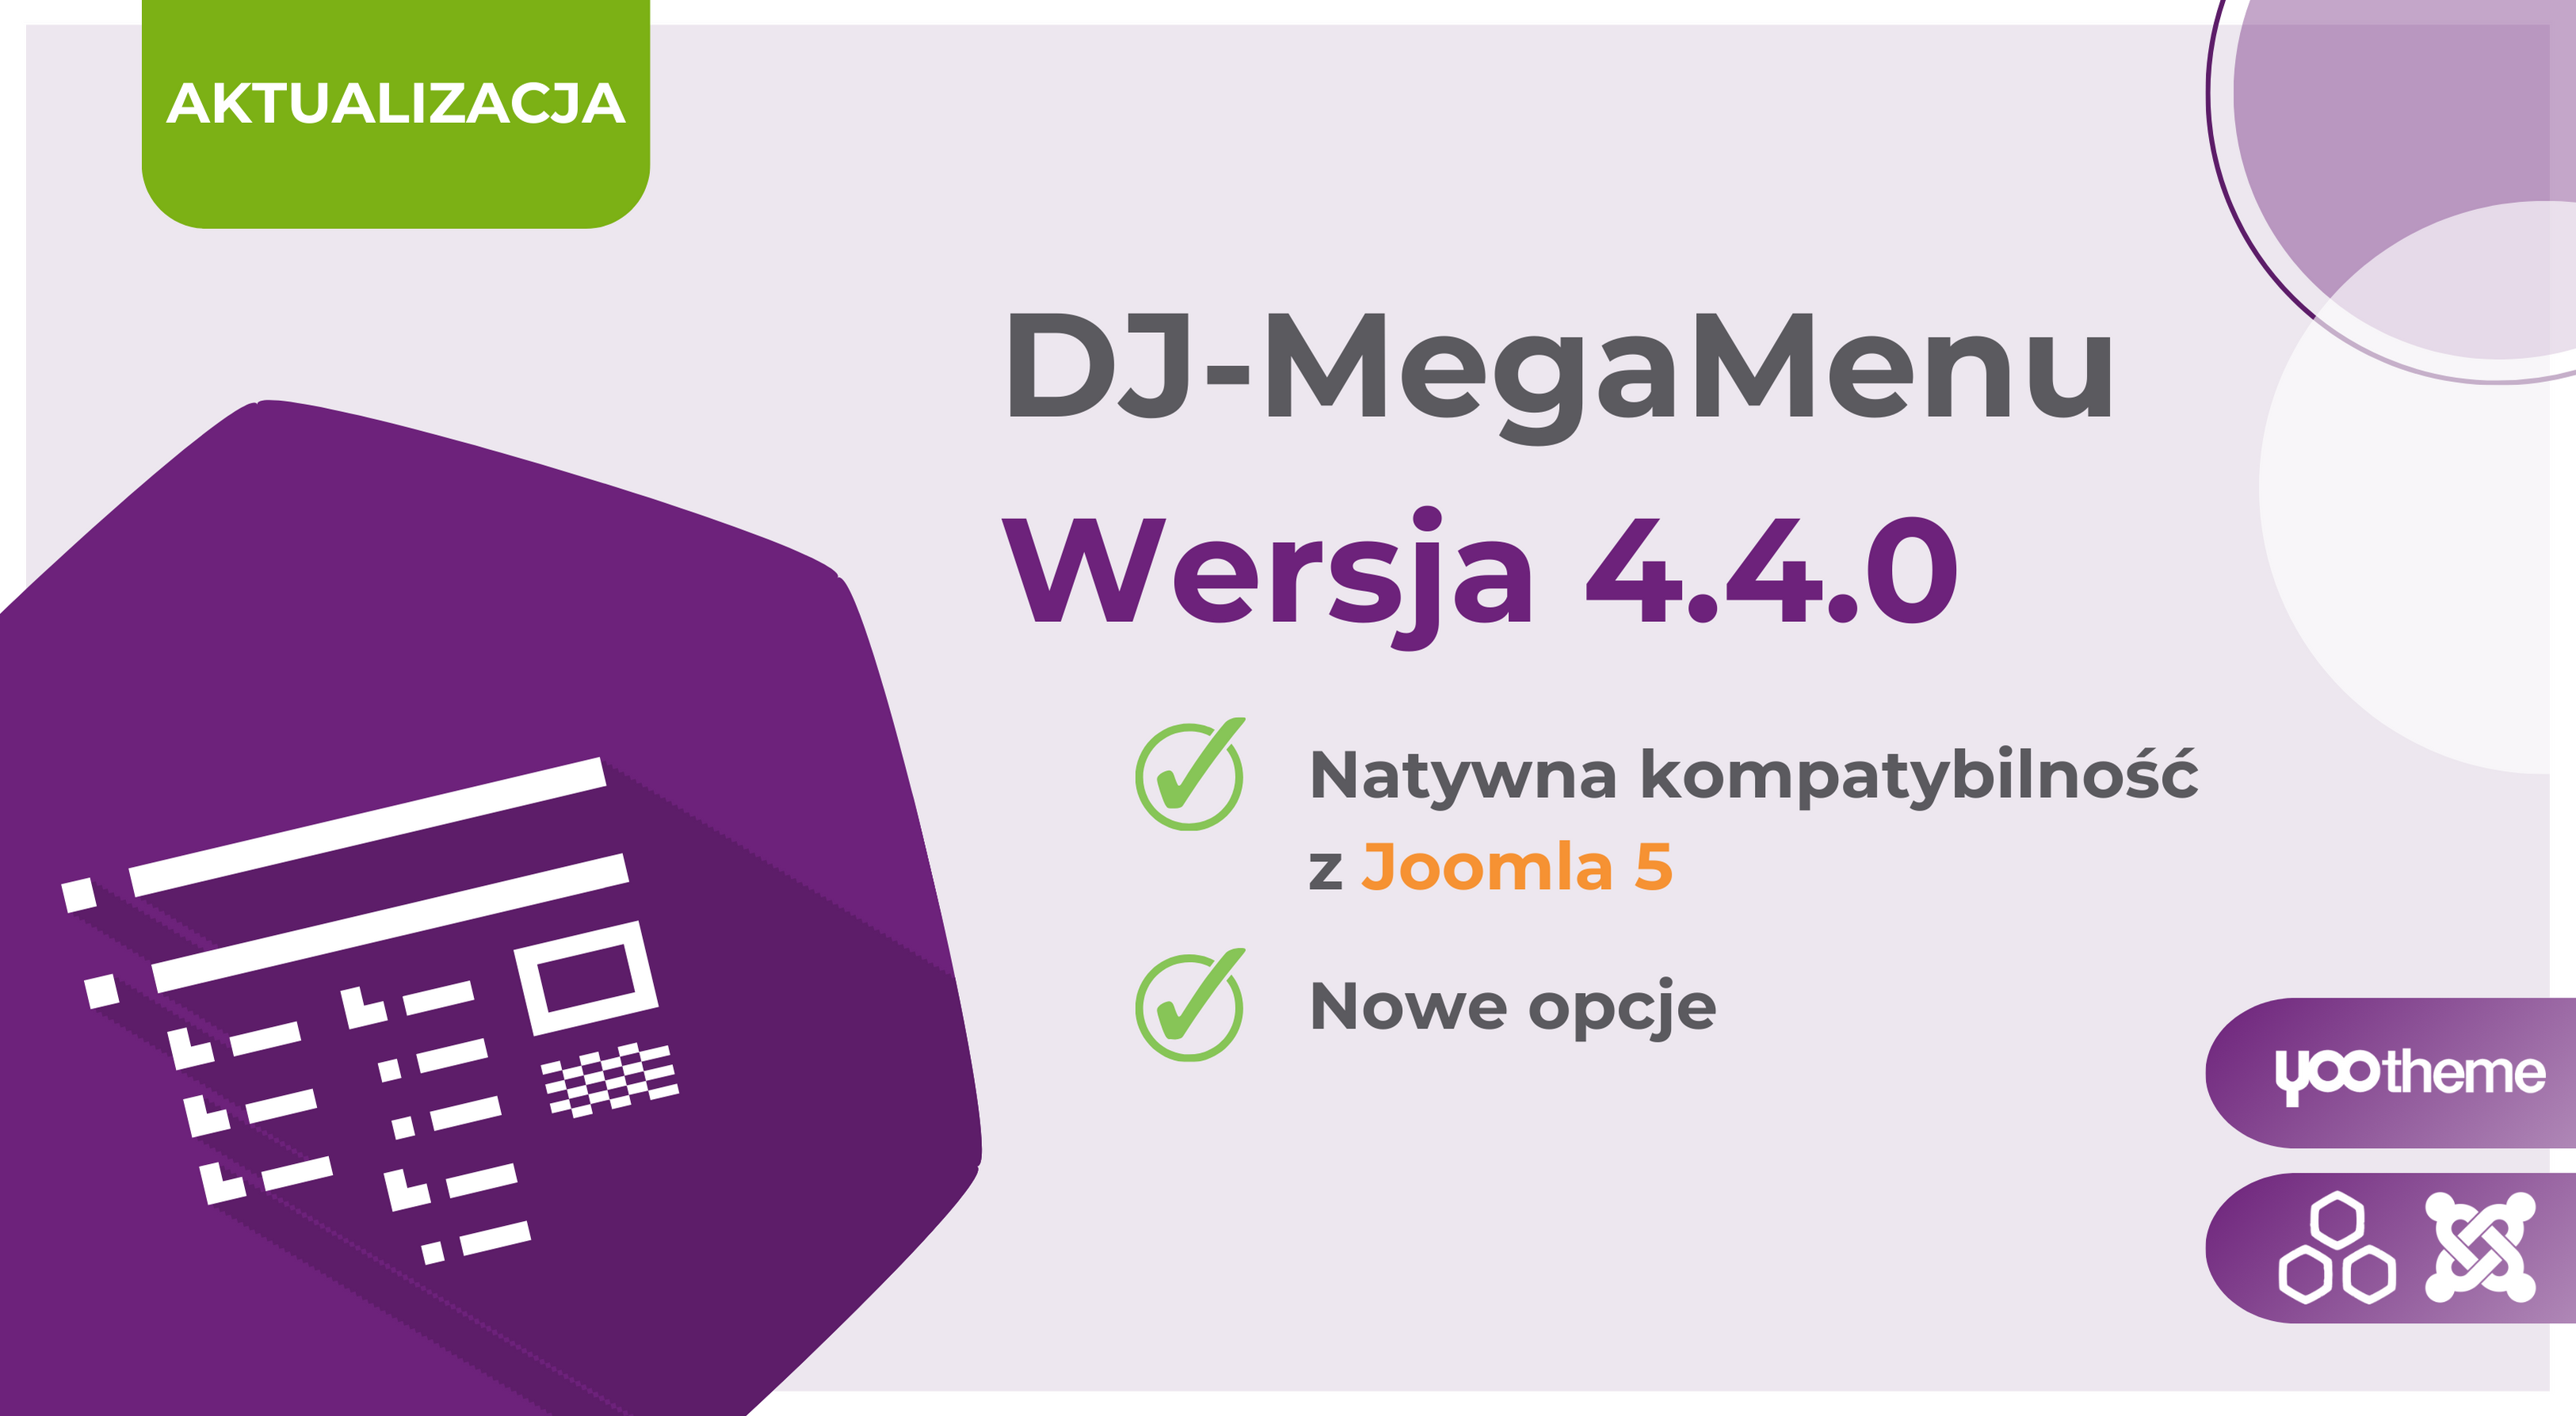 DJ-MegaMenu dla Joomla 5